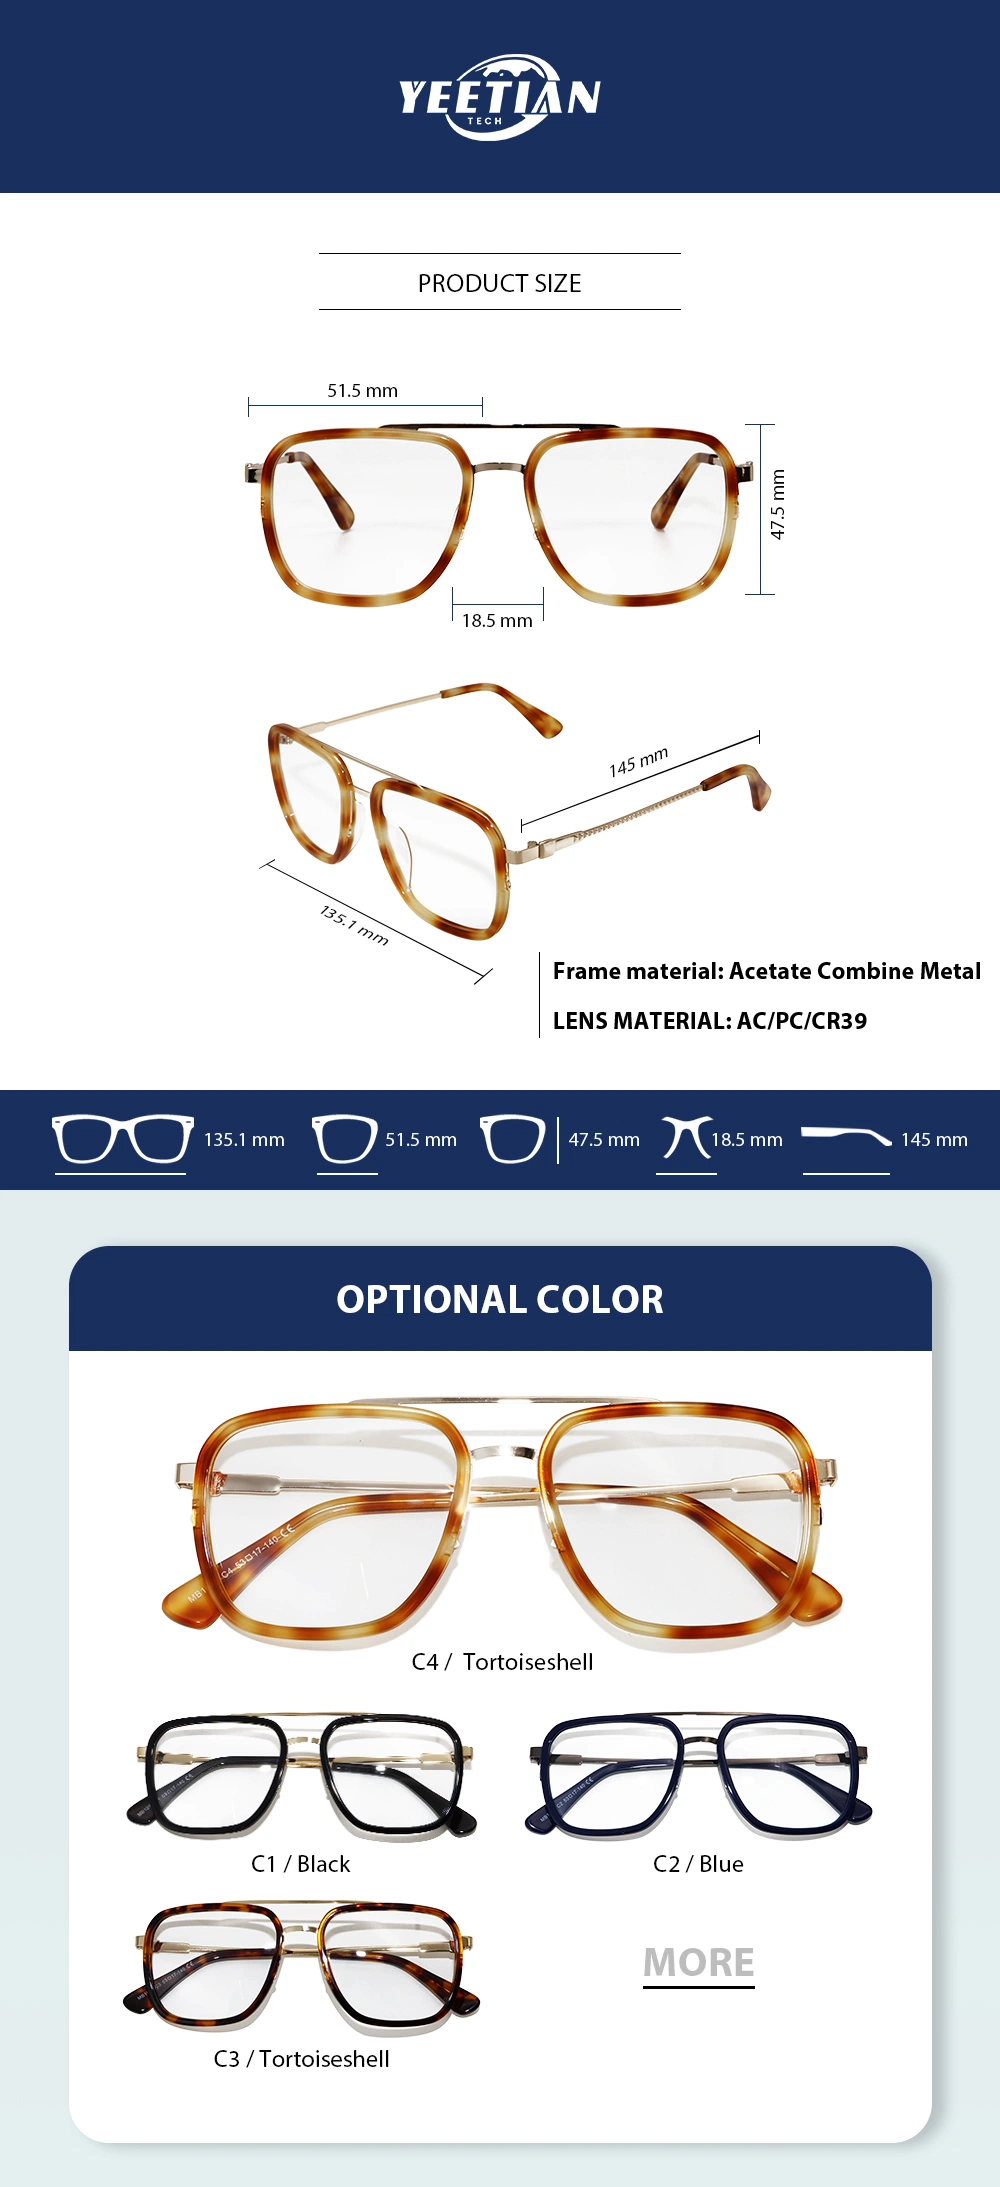 Yeetian Wholesale Chinese Double Bridge Captain Design Prescription Optical Glasses Metal Eyeglass Frames with Acetate for Men